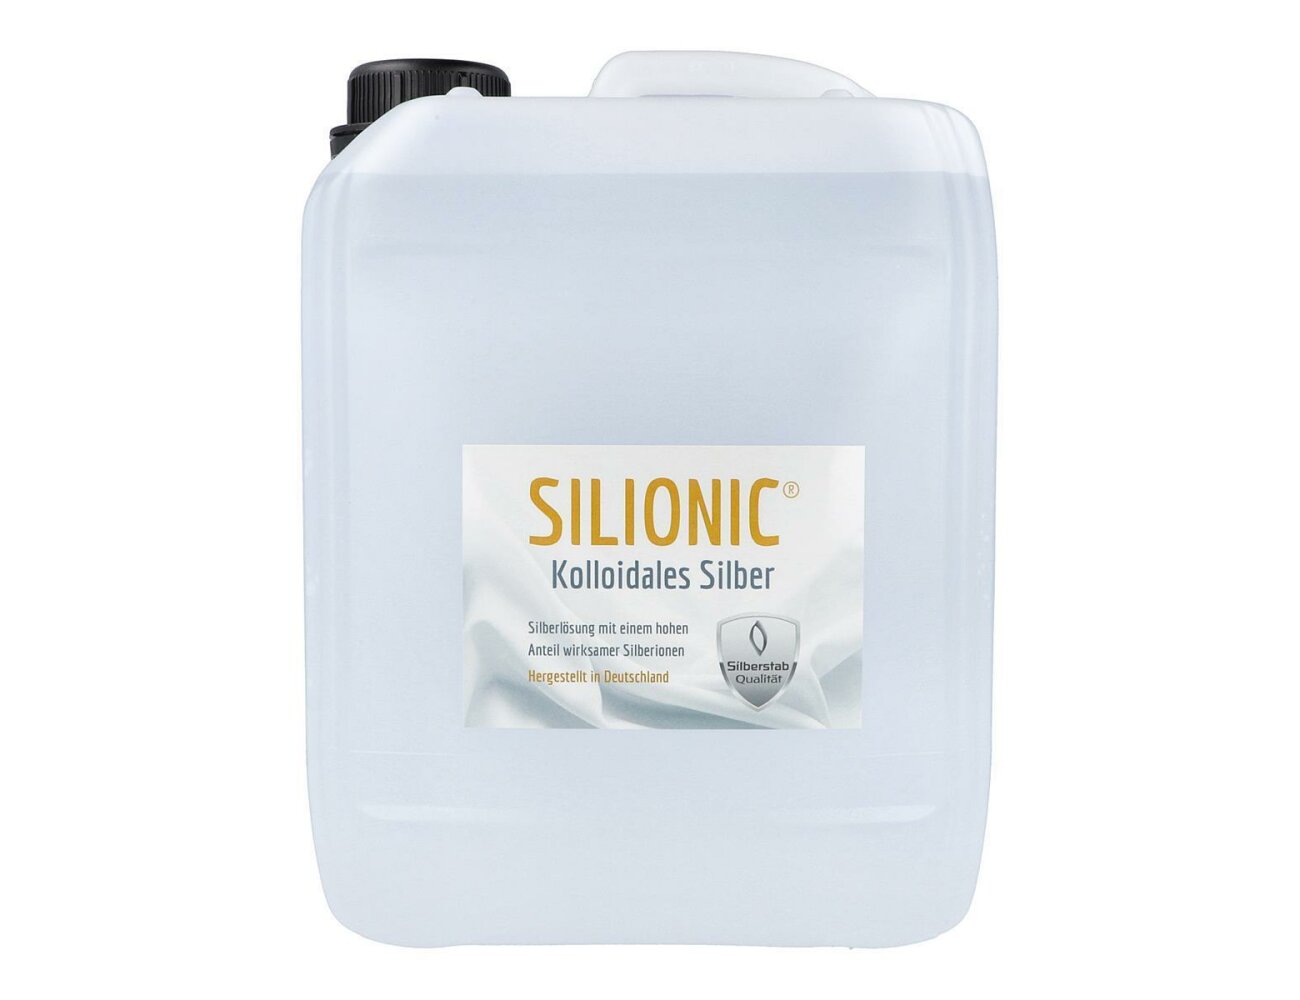 Silionic Kolloidales Silber, 100 ppm, 5 Liter